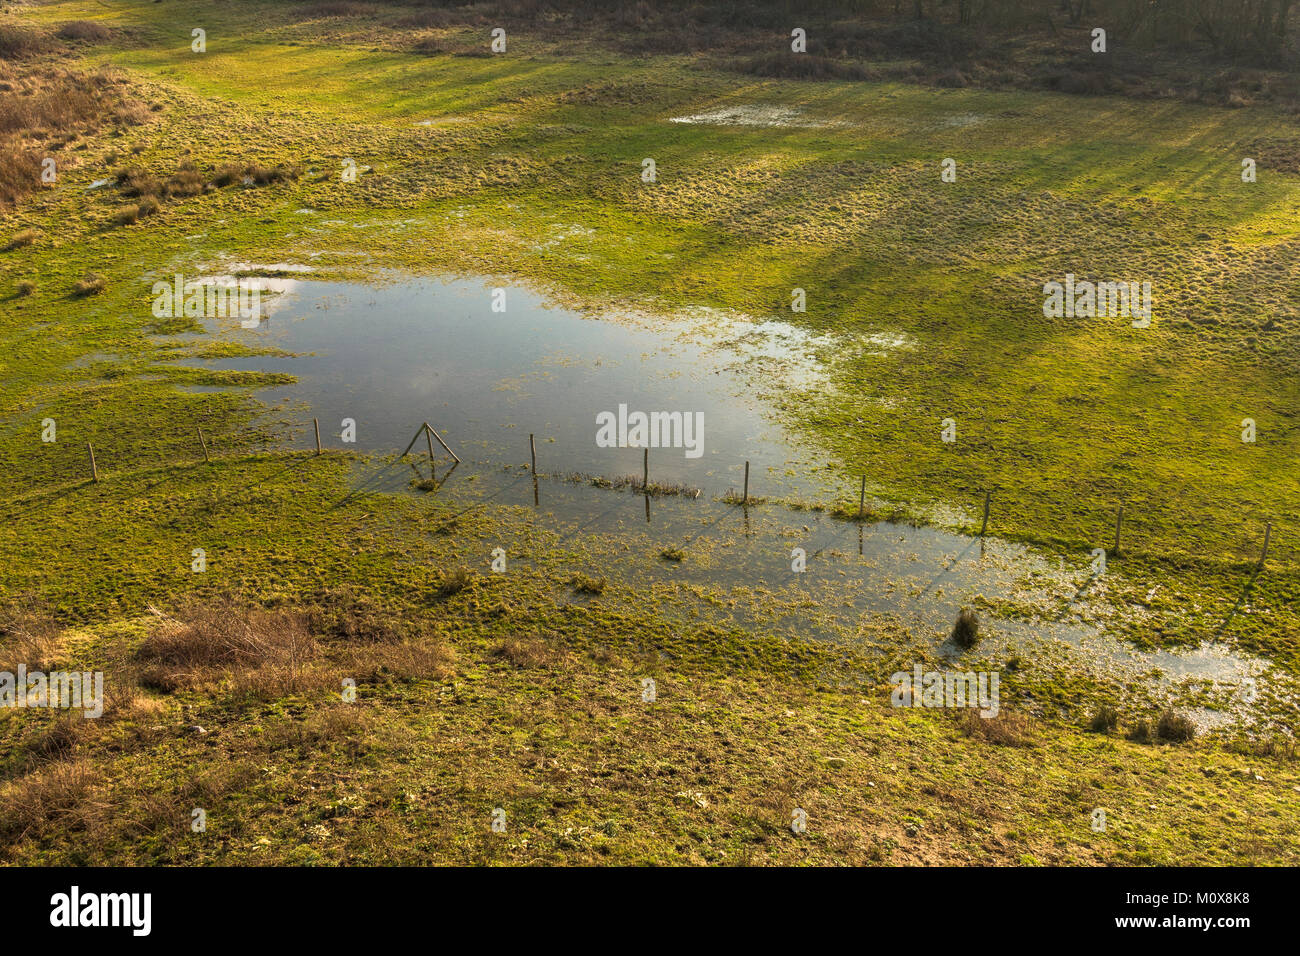 Floodplain, floodplains, Meadow field under water, flooded RivierPark Maasvallei,, ponds at The Meuse, Limburg, Belgium. Stock Photo